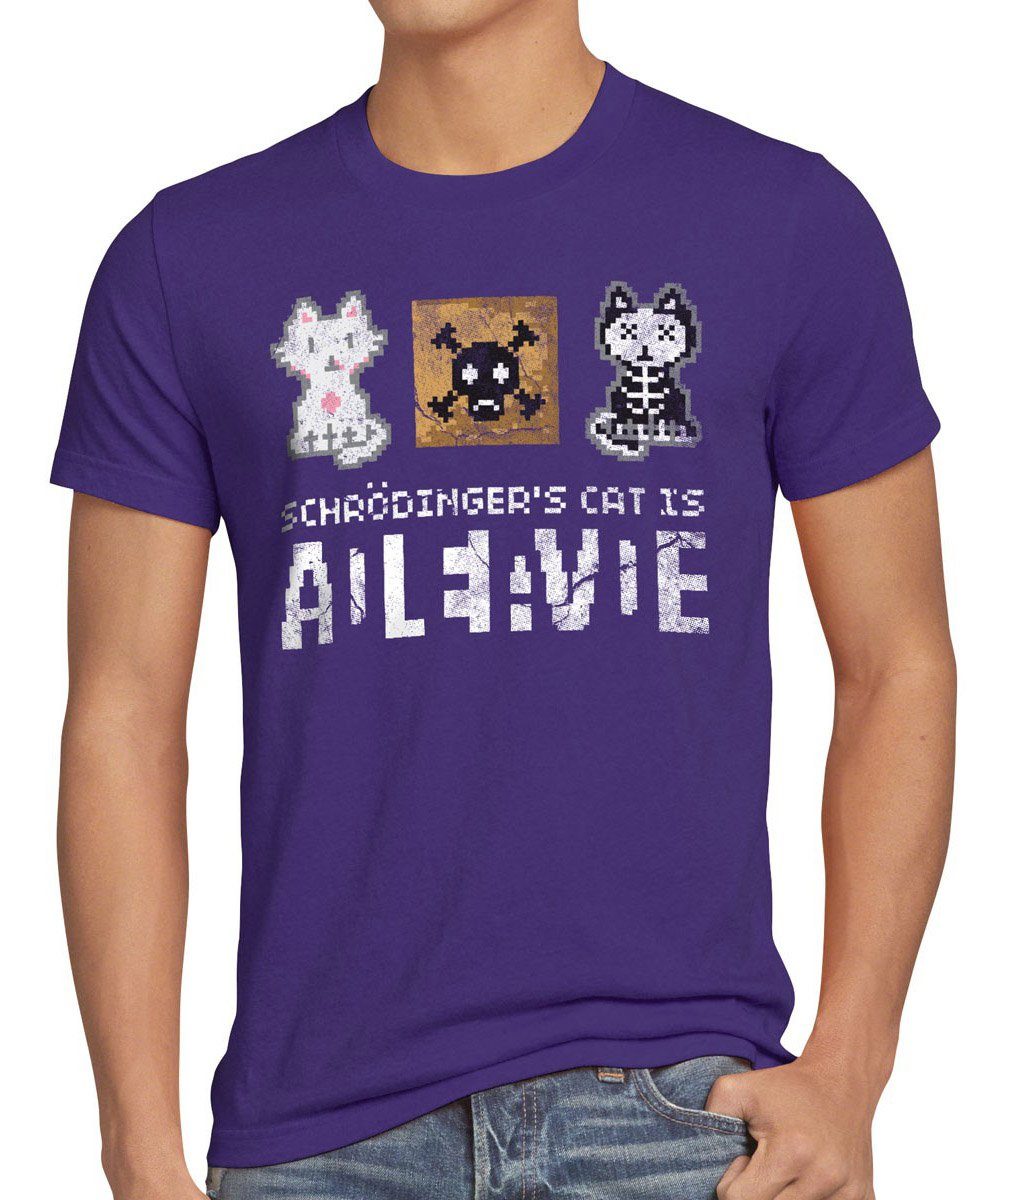 style3 Print-Shirt Herren T-Shirt 8Bit Schrödingers Katze big bang cooper cat schroedinger sheldon lila